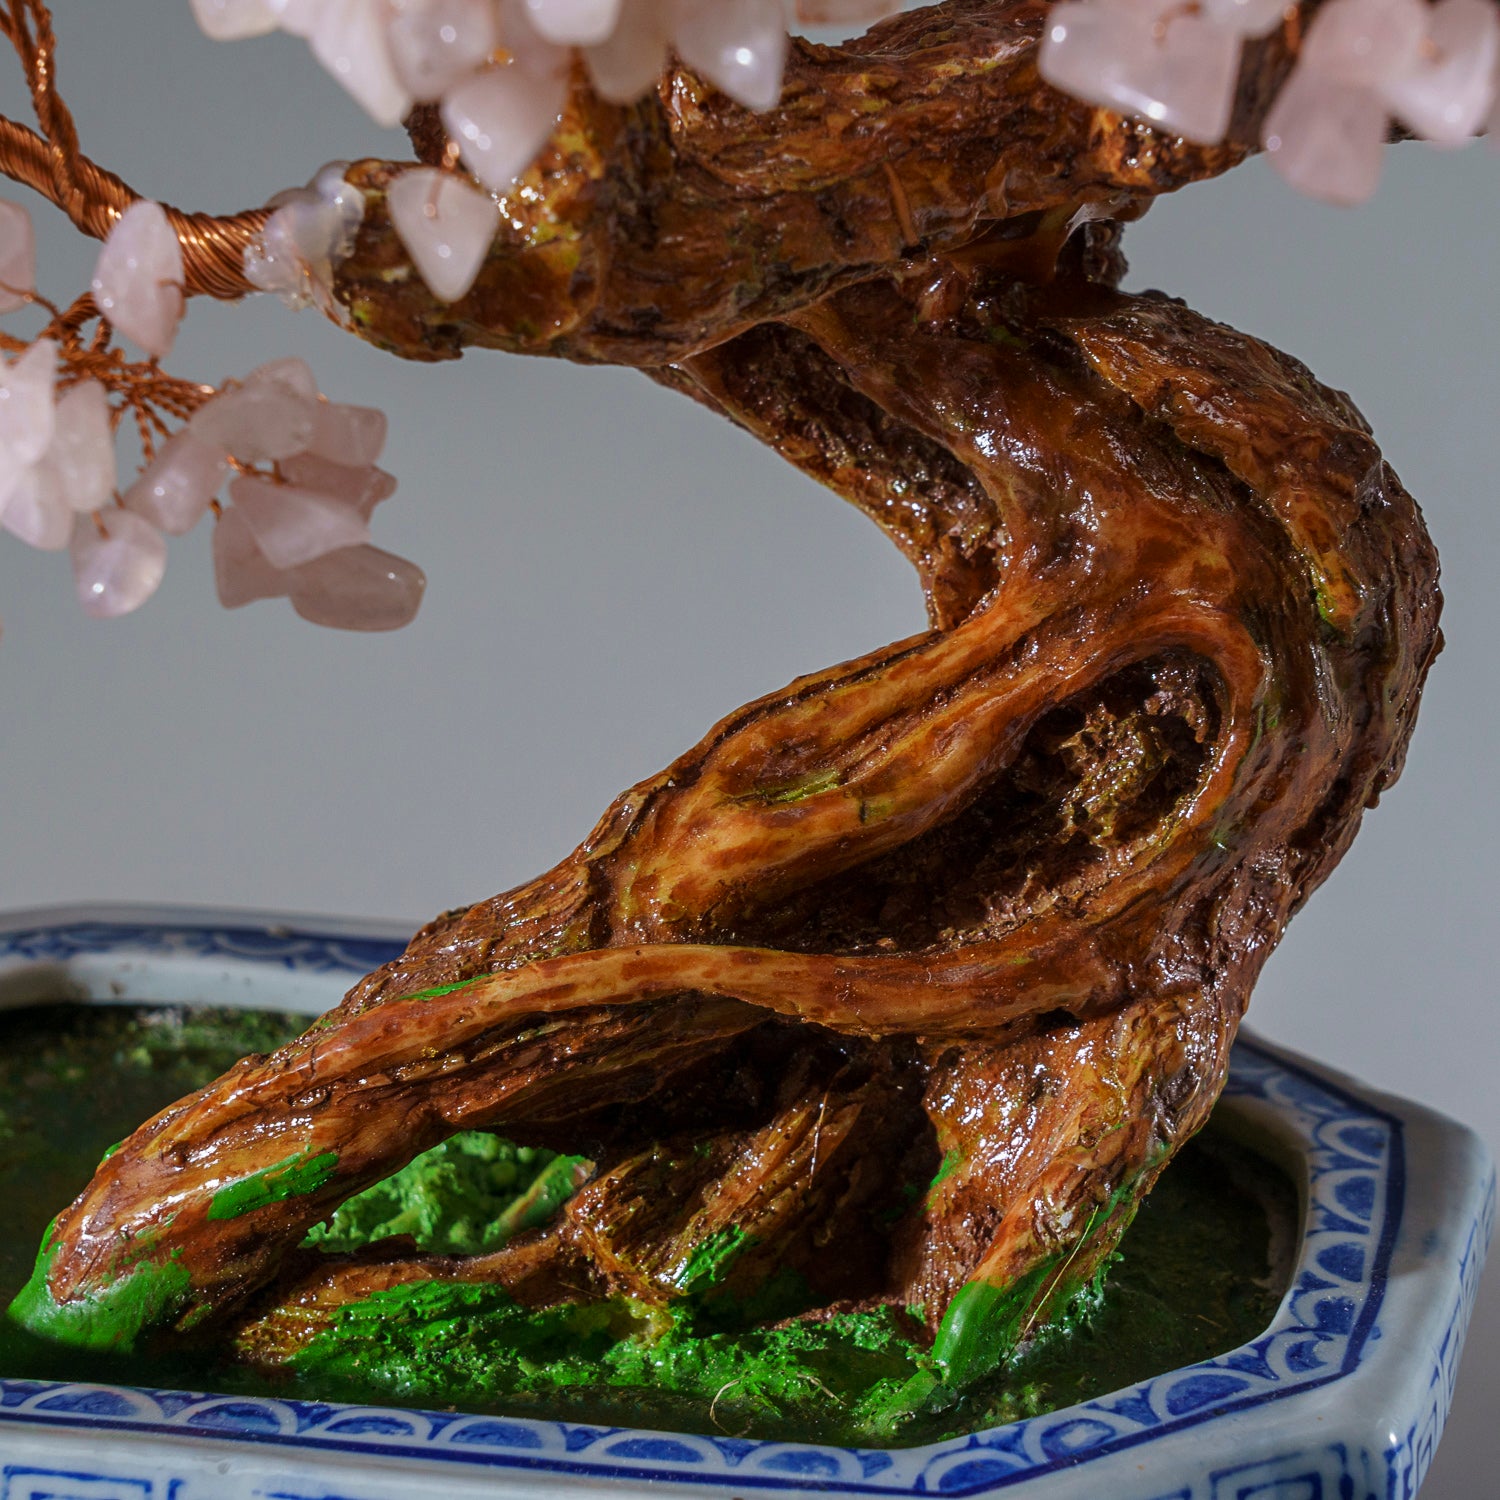 Genuine Rose Quartz Bonsai Tree in Square Ceramic Pot (11” Tall)